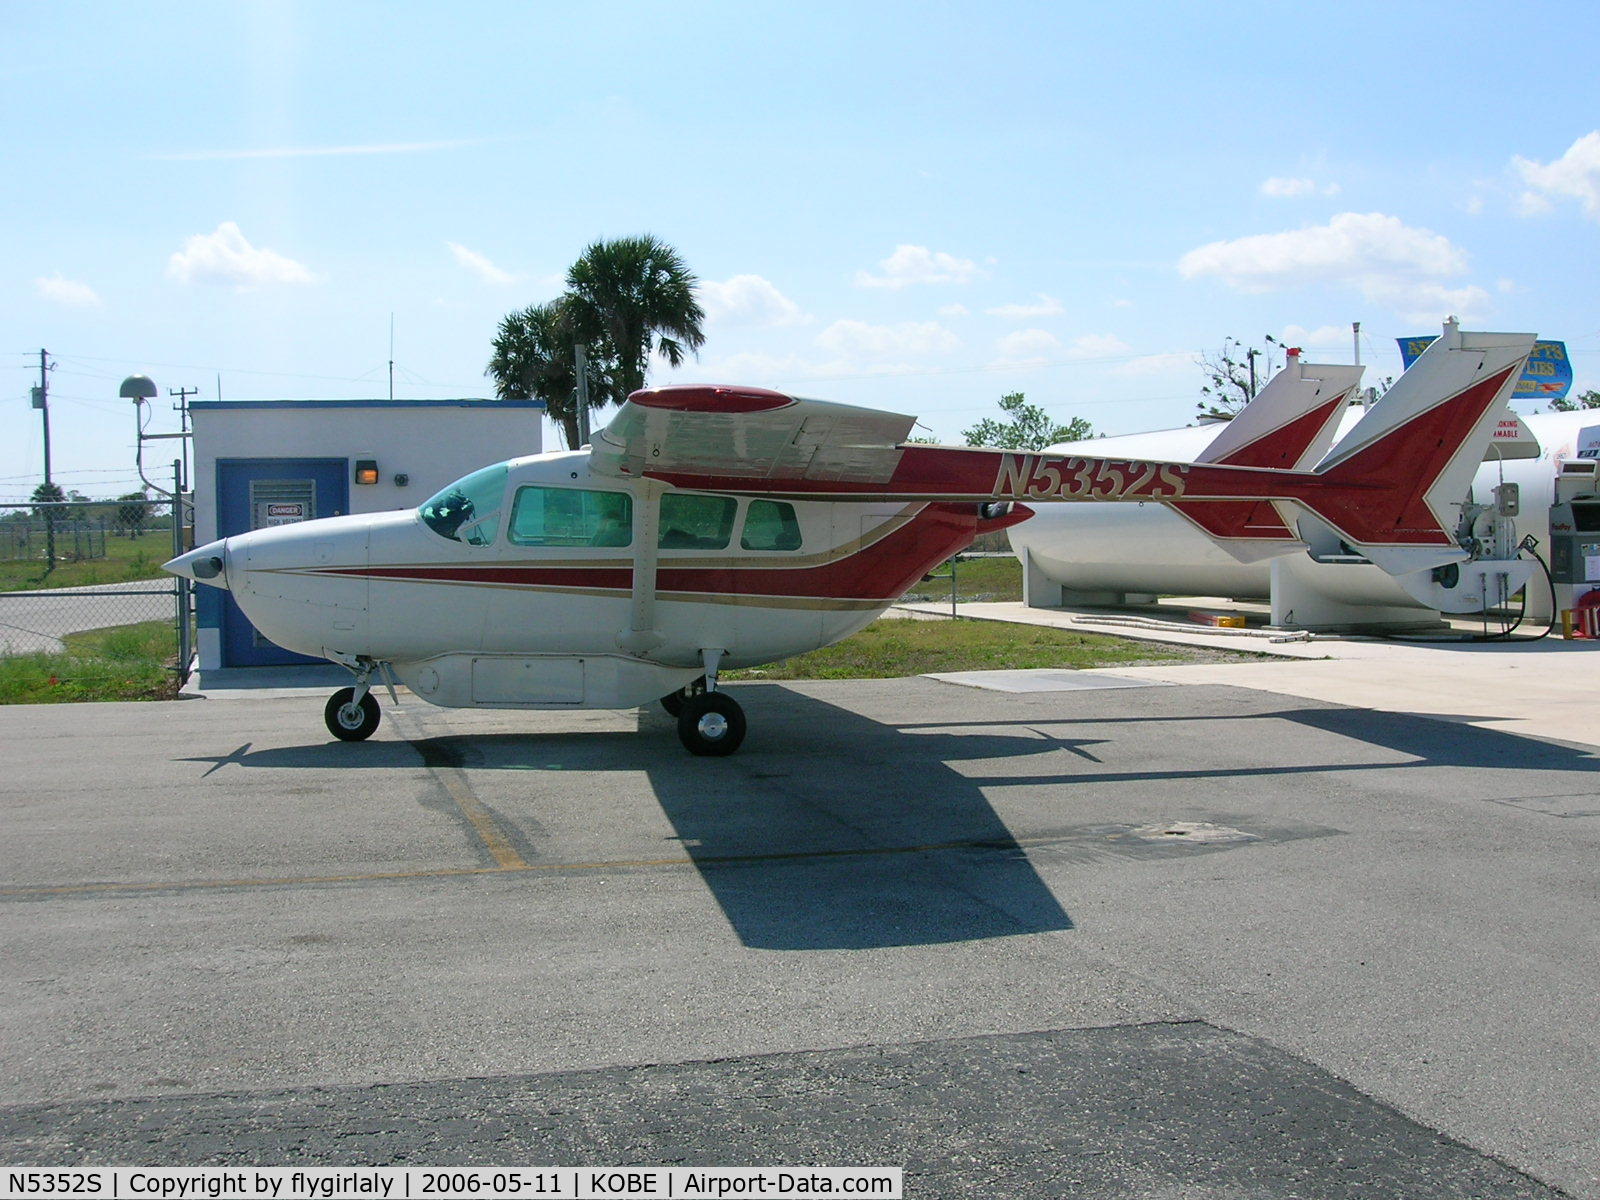 N5352S, 1966 Cessna 337A Super Skymaster C/N 337-0452, fuelin up